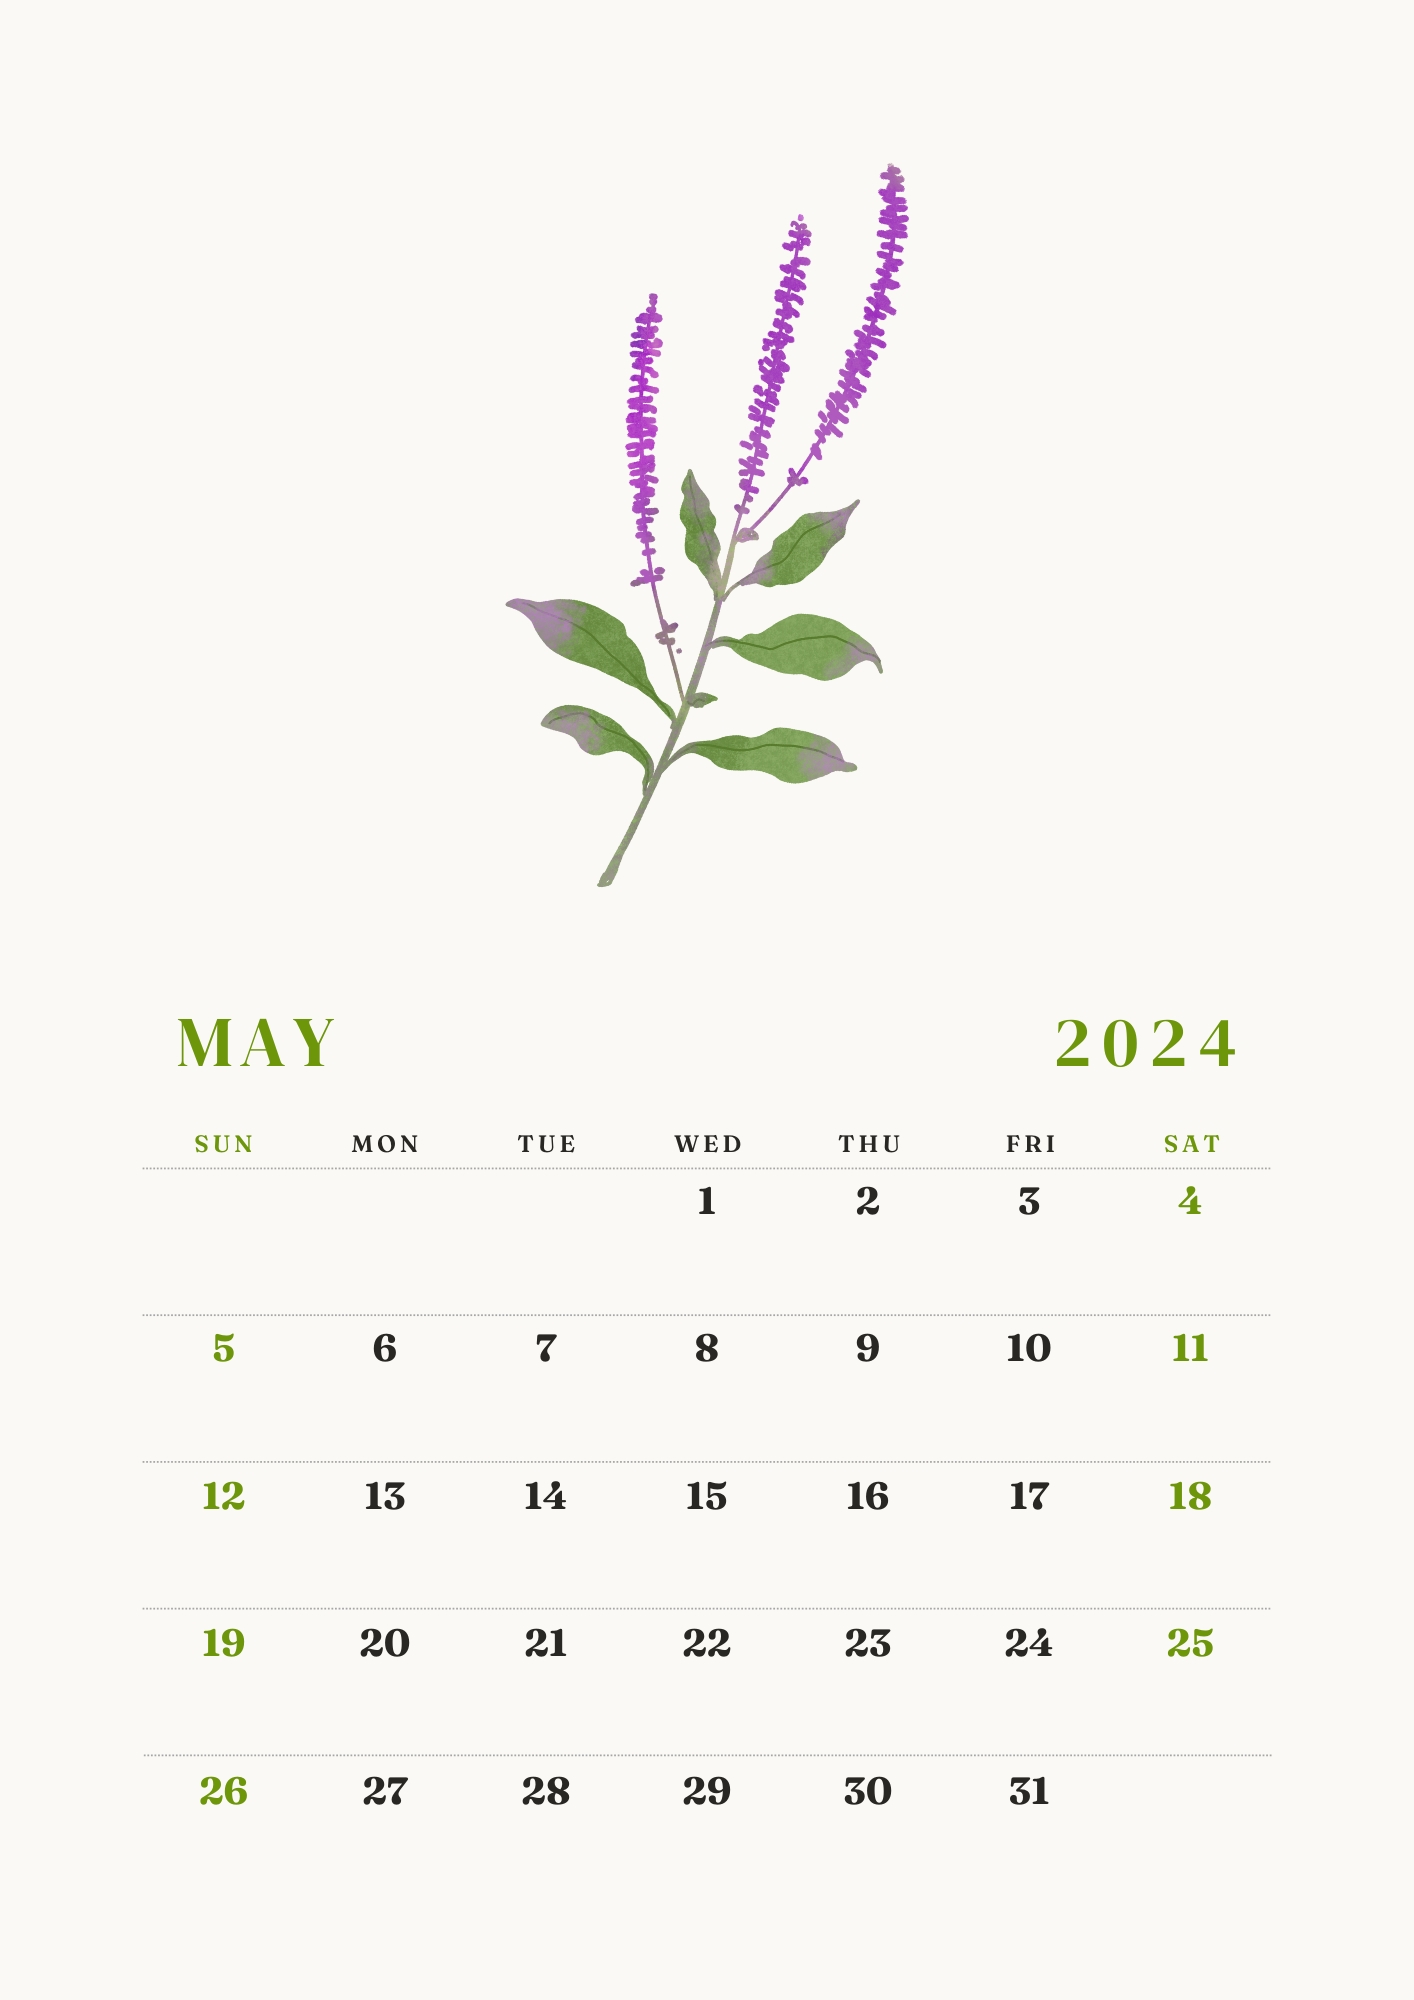 floral design may 2024 calendar 